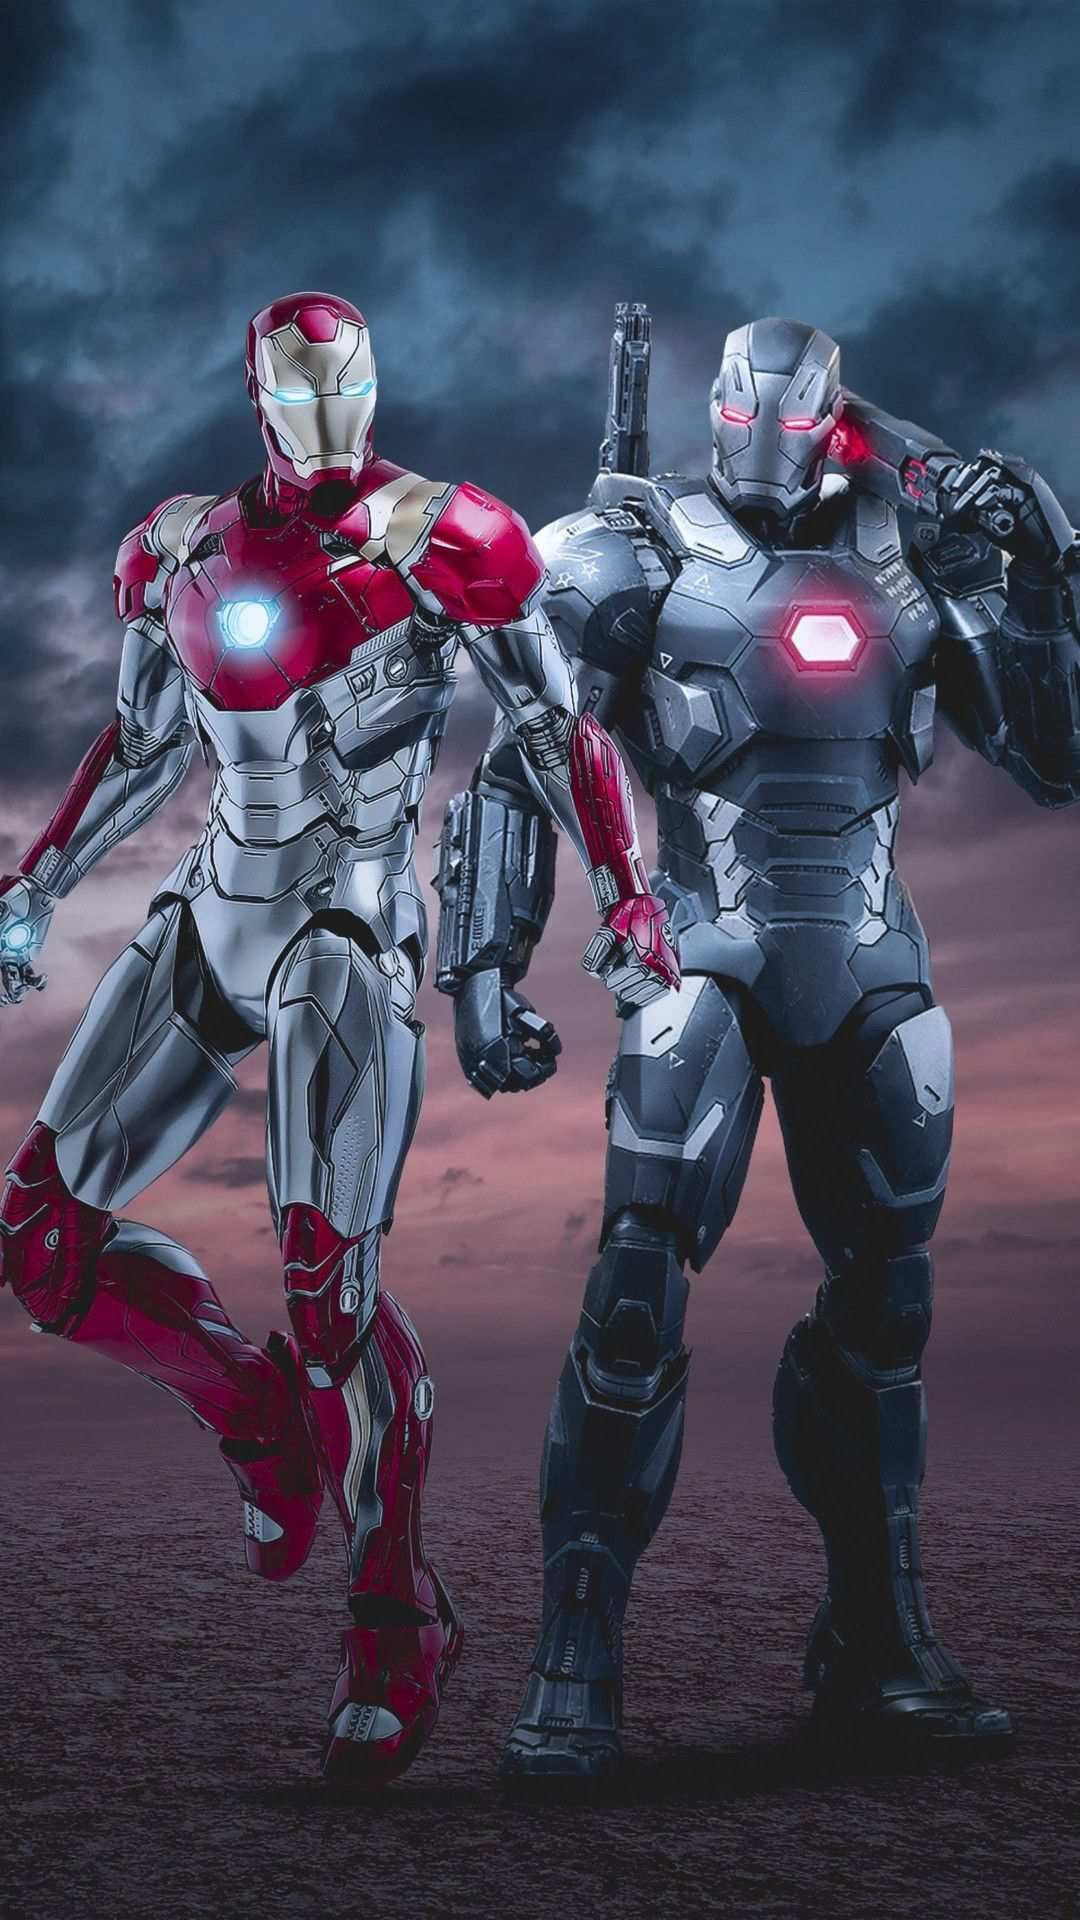 Iron Man With War Machine iPhone Wallpaper. Marvel superheroes art, Marvel superhero posters, Iron man armor